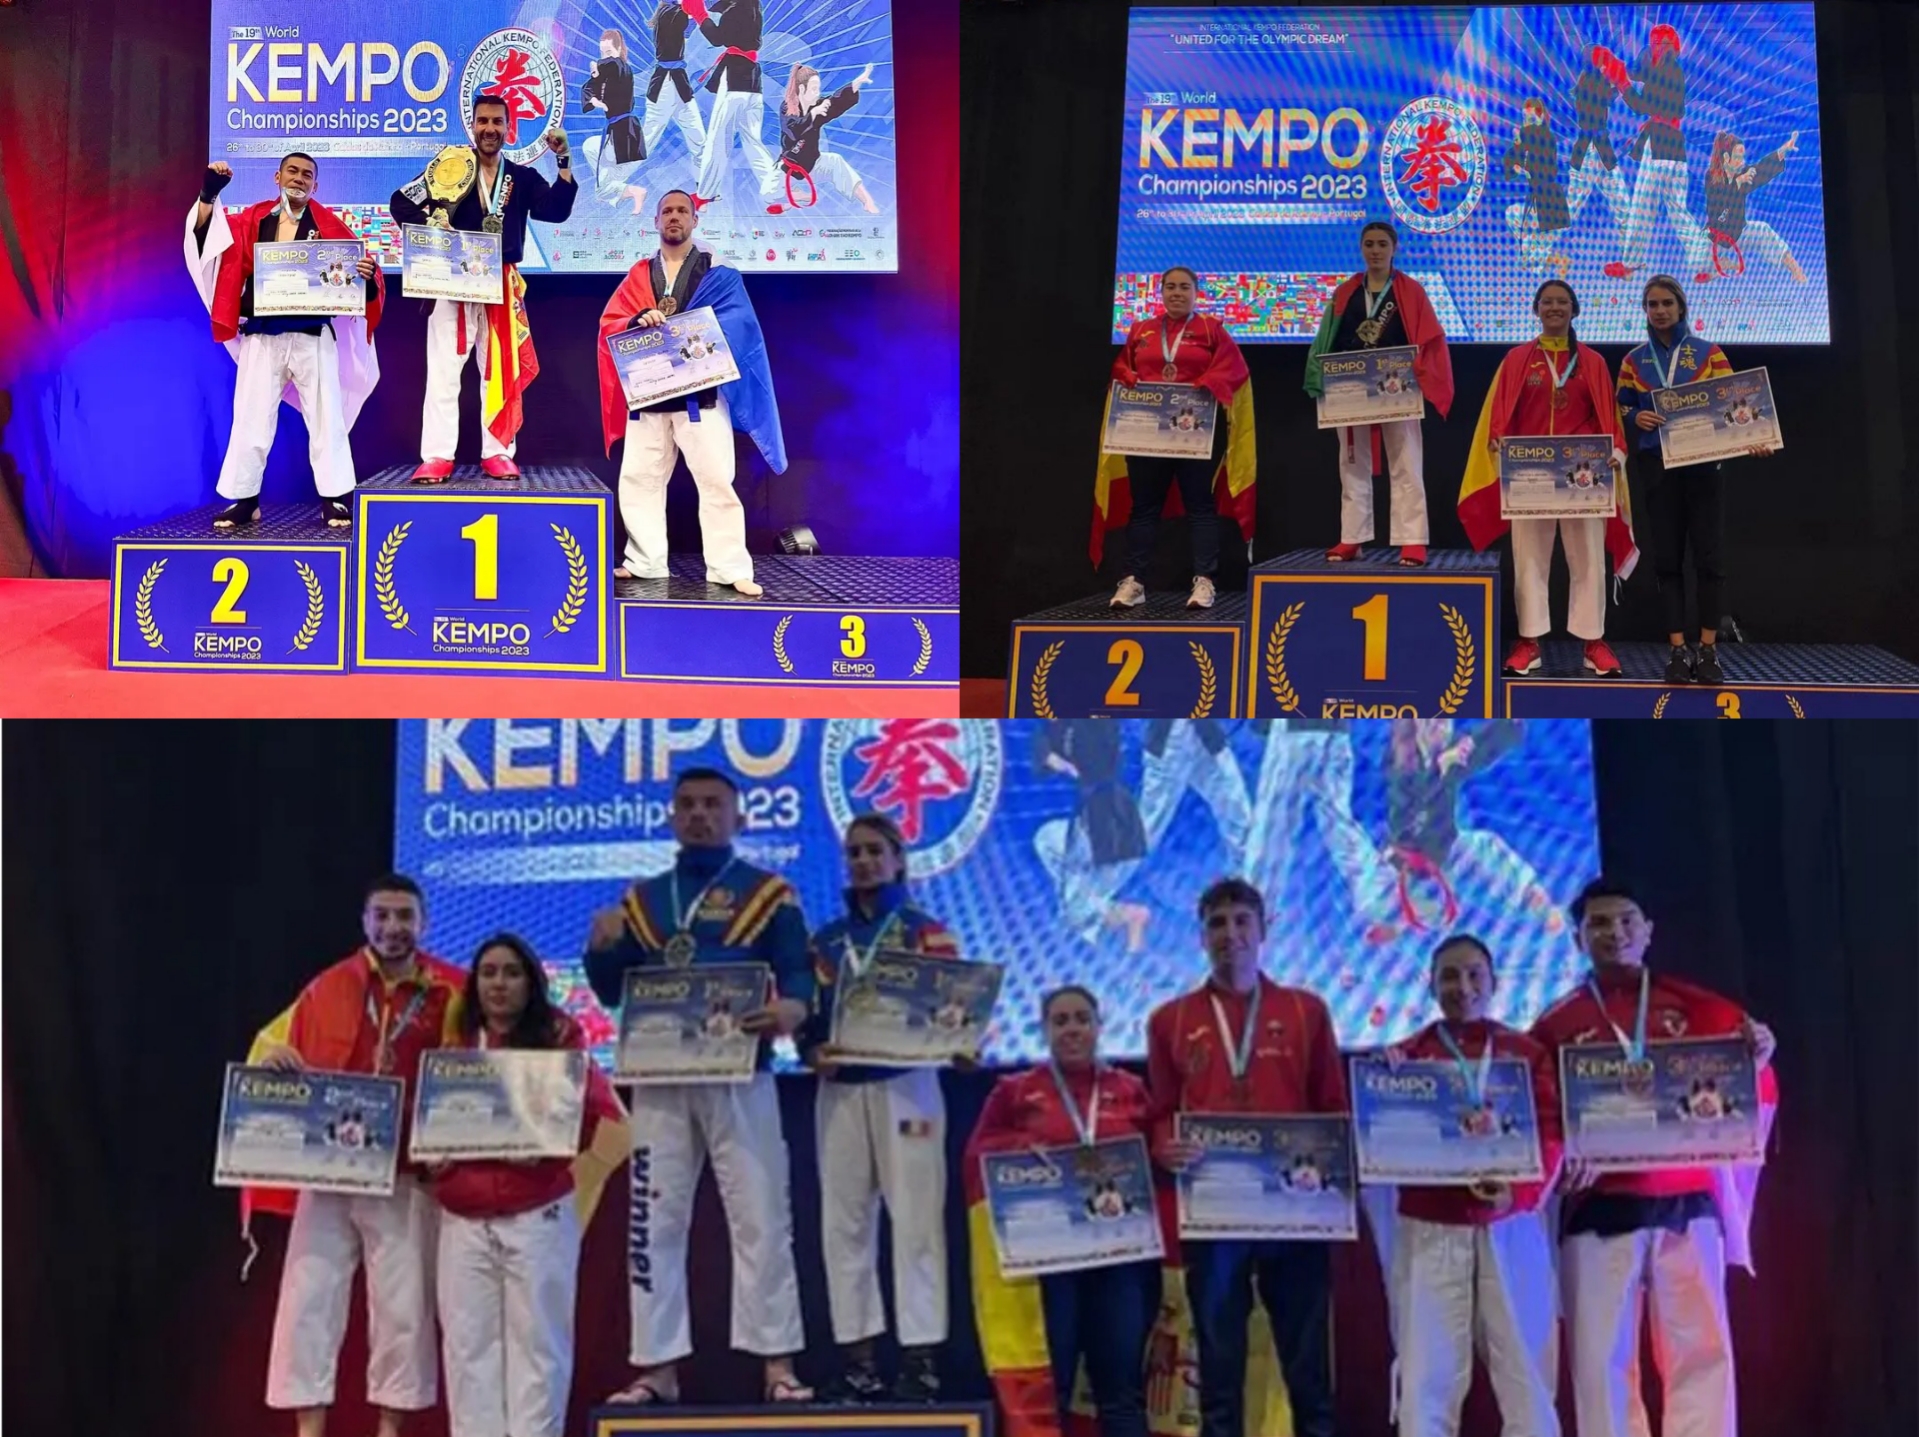 Ángel Ruíz  tricampéon en máster,Ángela Polaina y Agustín Rodríguez medallistas jiennenses en el mundial de Kenpo celebrado en Portugal